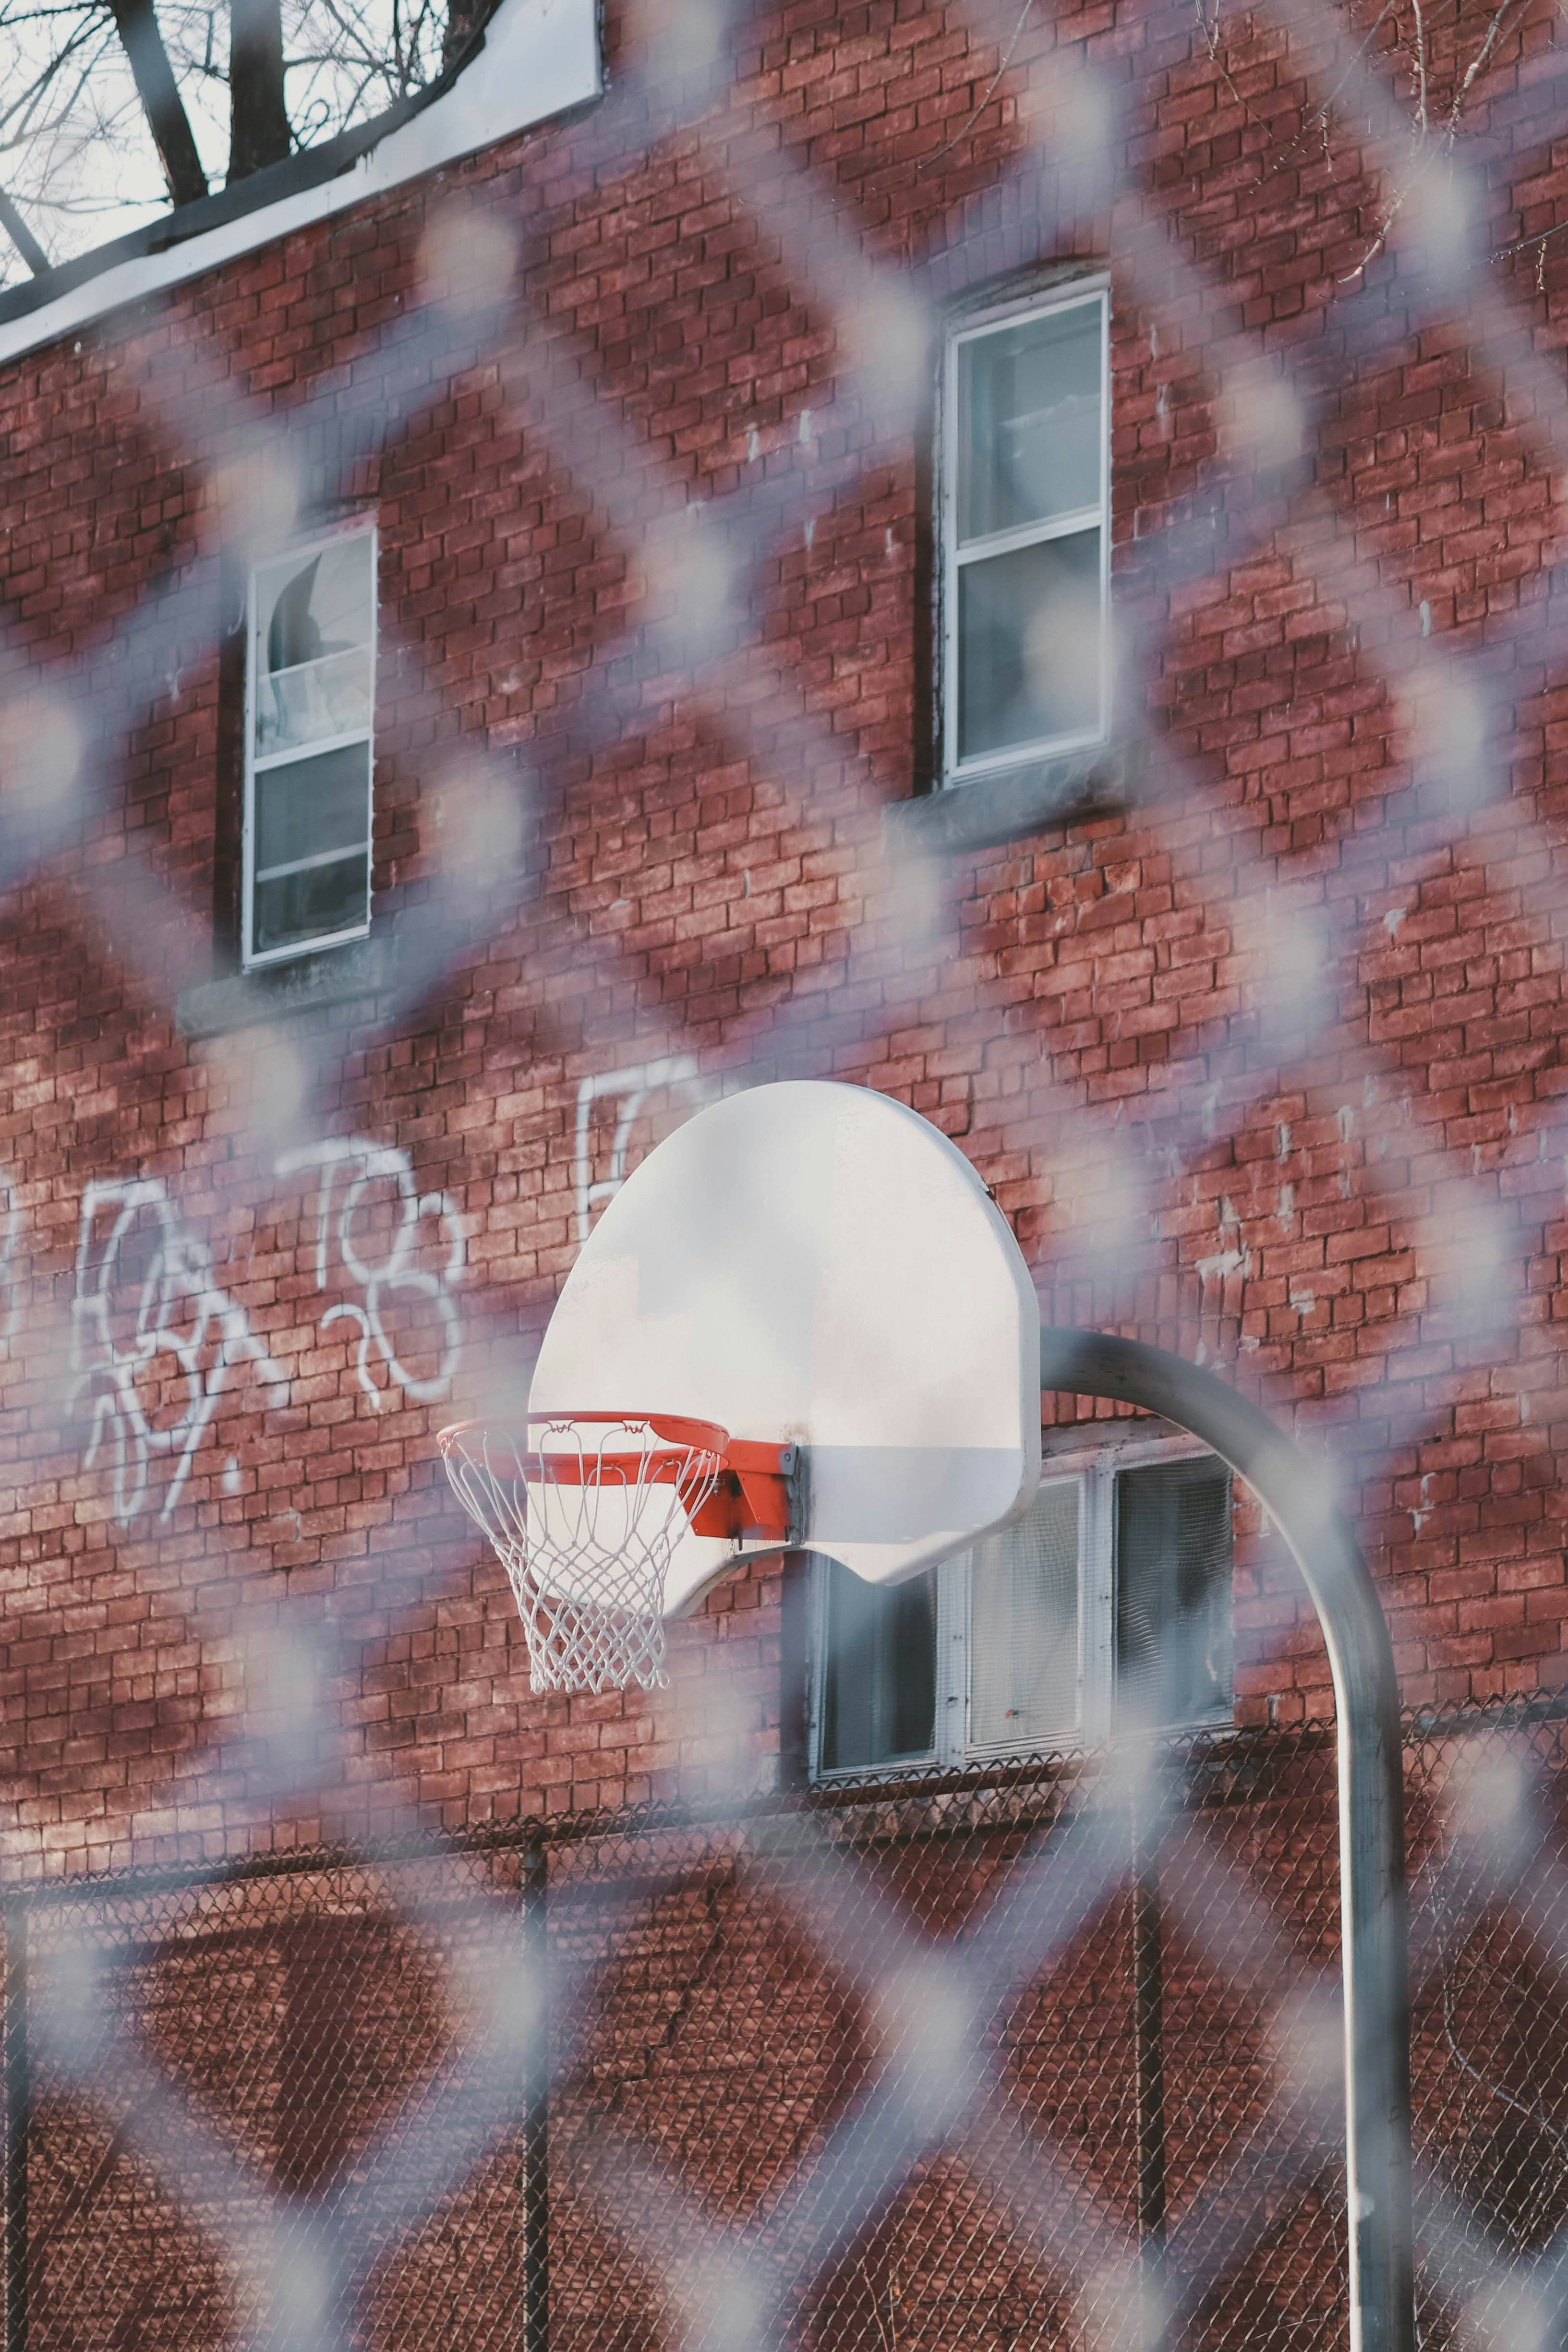 Basketball net in Toronto.